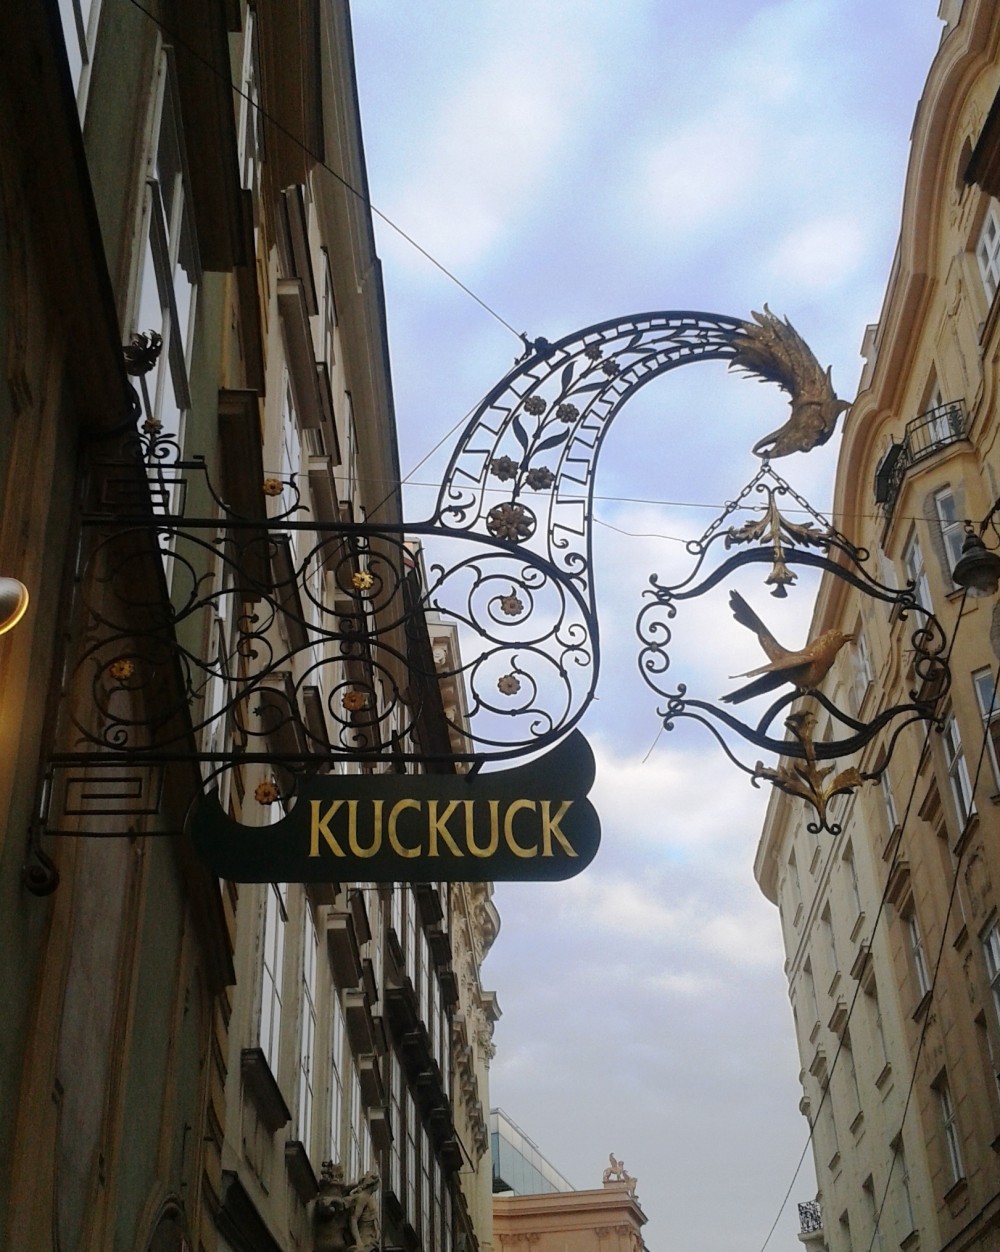 Der Kuckuck Lokalaußenreklame - Der Kuckuck - Wien